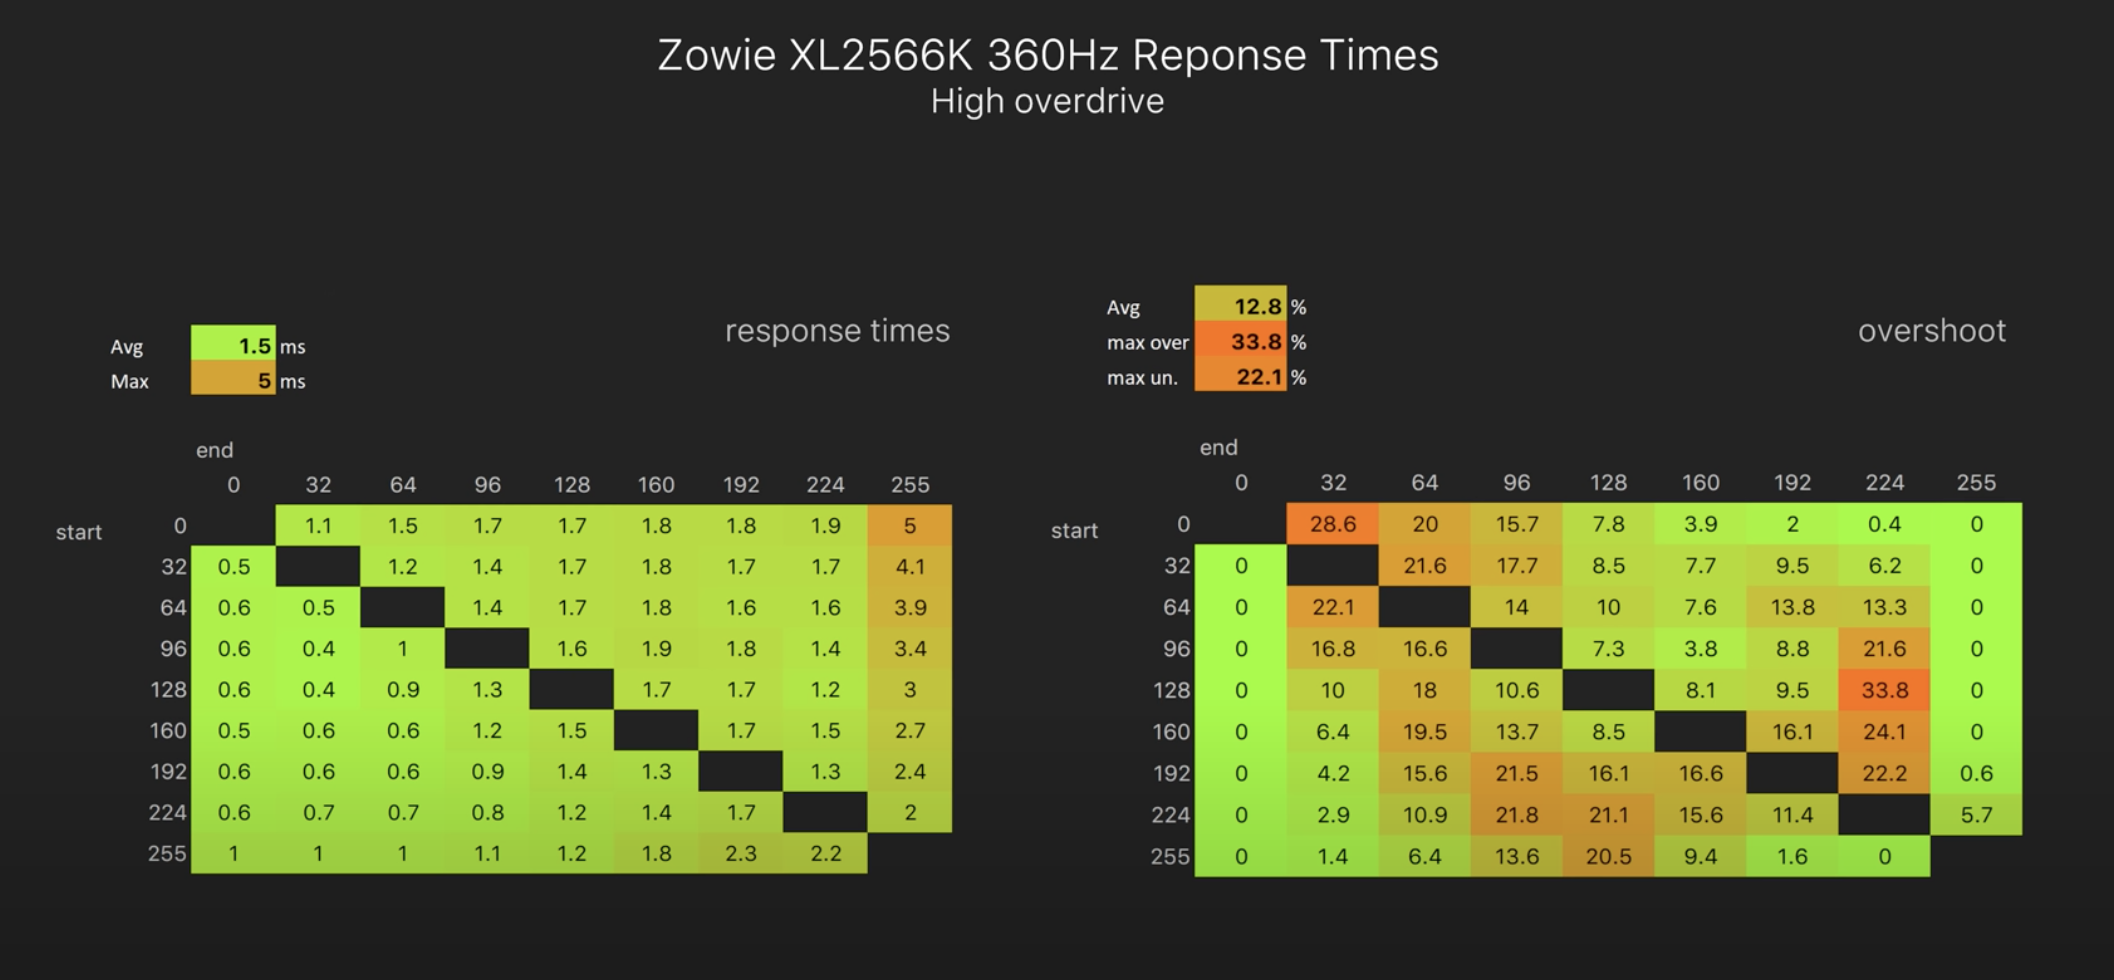 Response Times - Zowie XL2566K